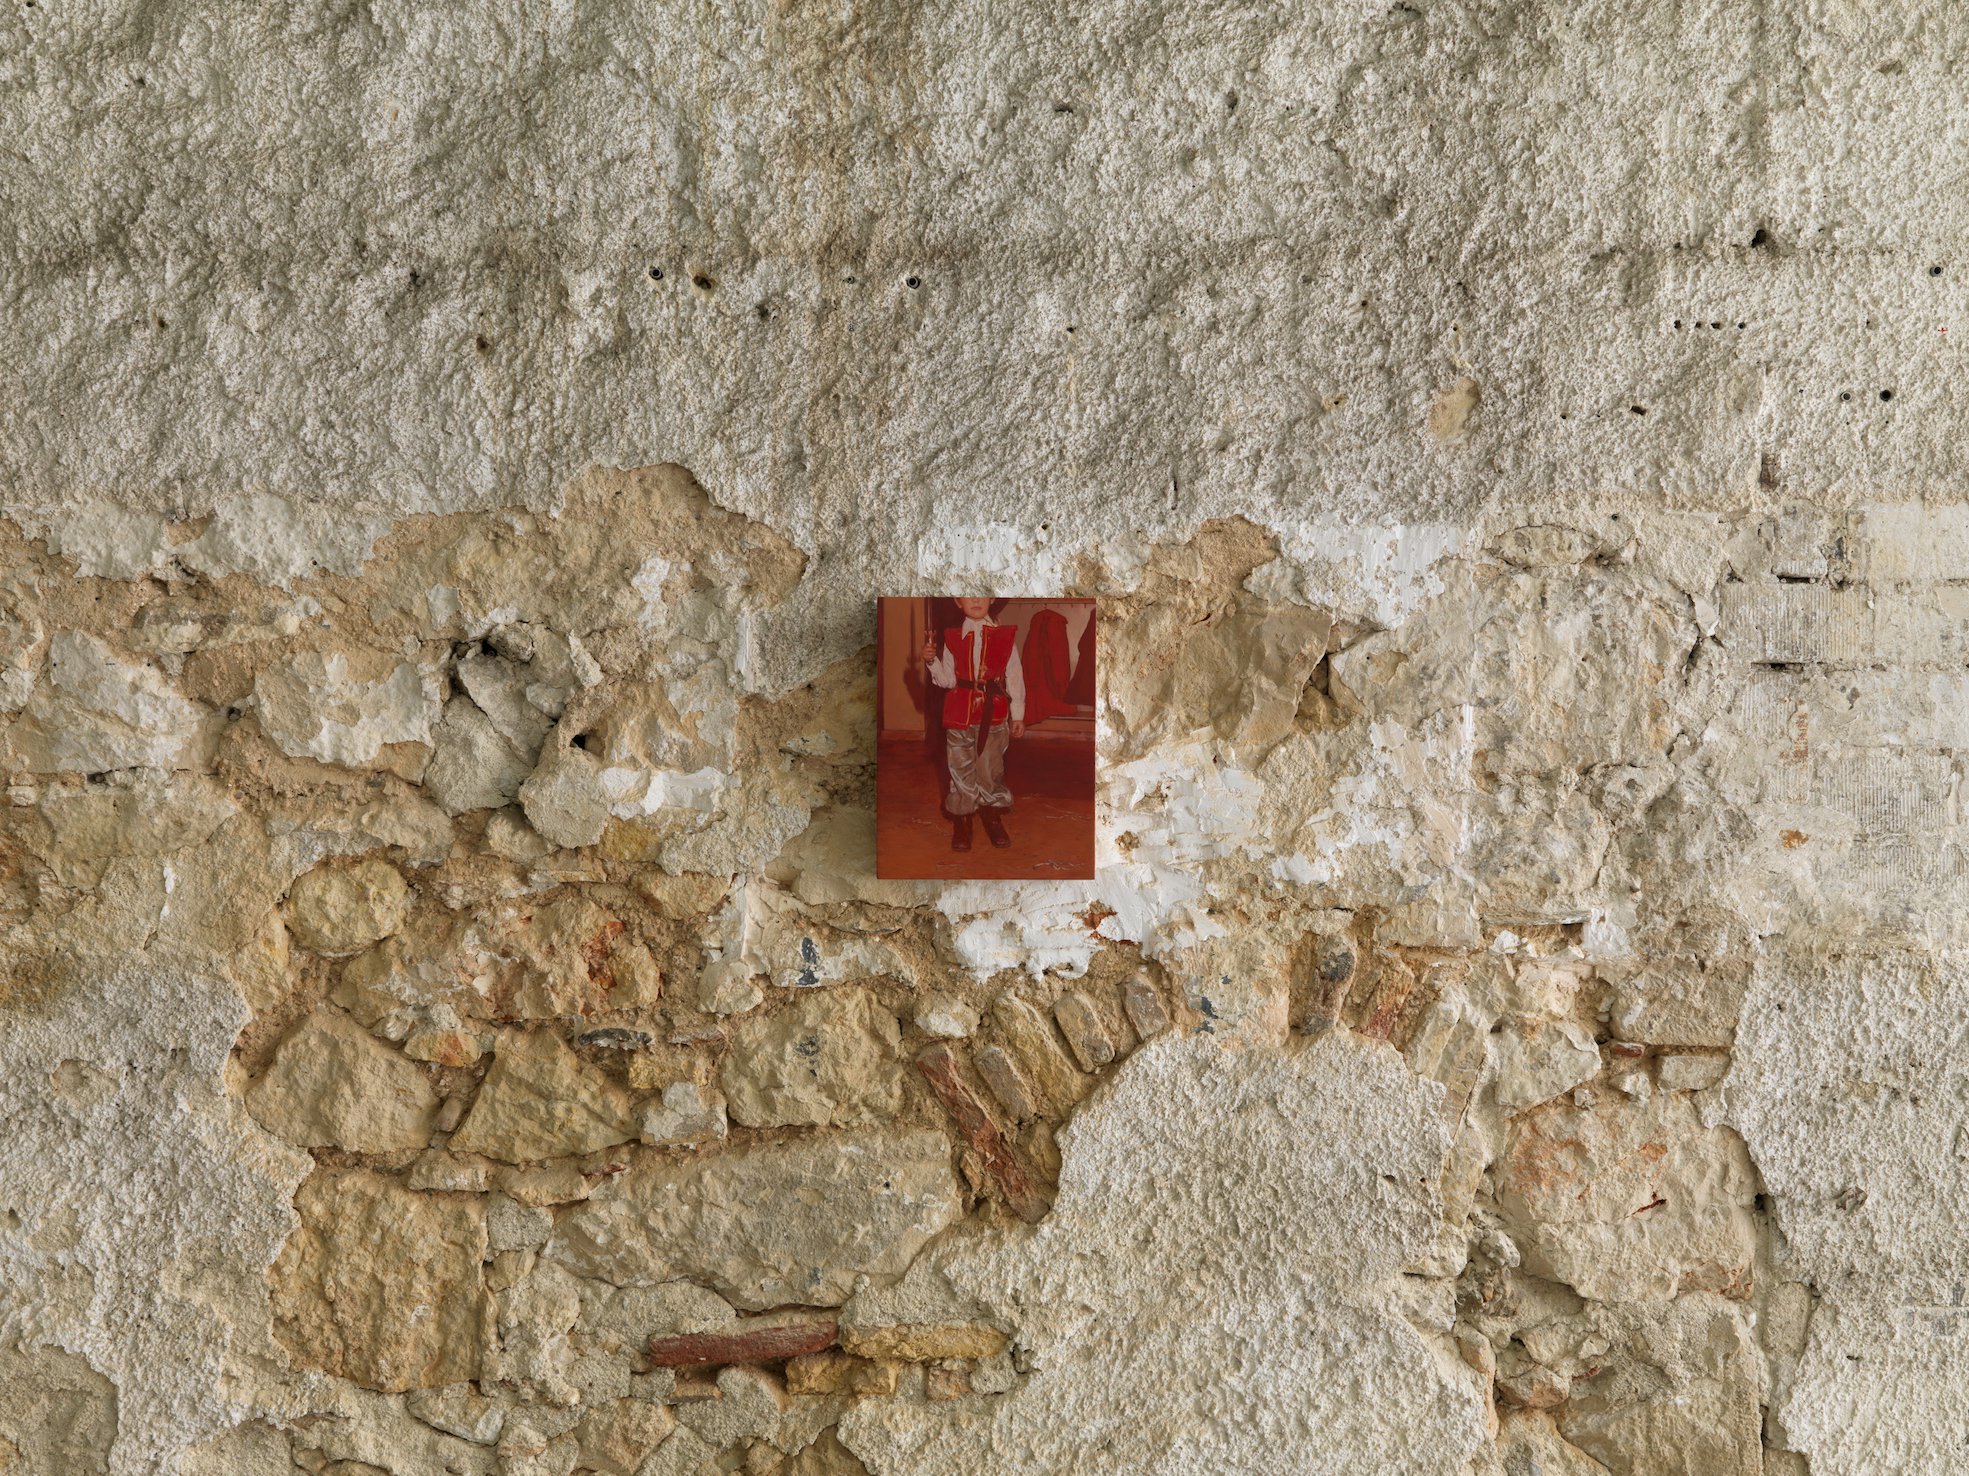 Eftihis Patsourakis, Headless (24 February), οil on wood, 35 x 27 cm (13 3/4 x 10 5/8 in), 2022. Installation view, Ζωγραφική, Rodeo, Piraeus, 2023